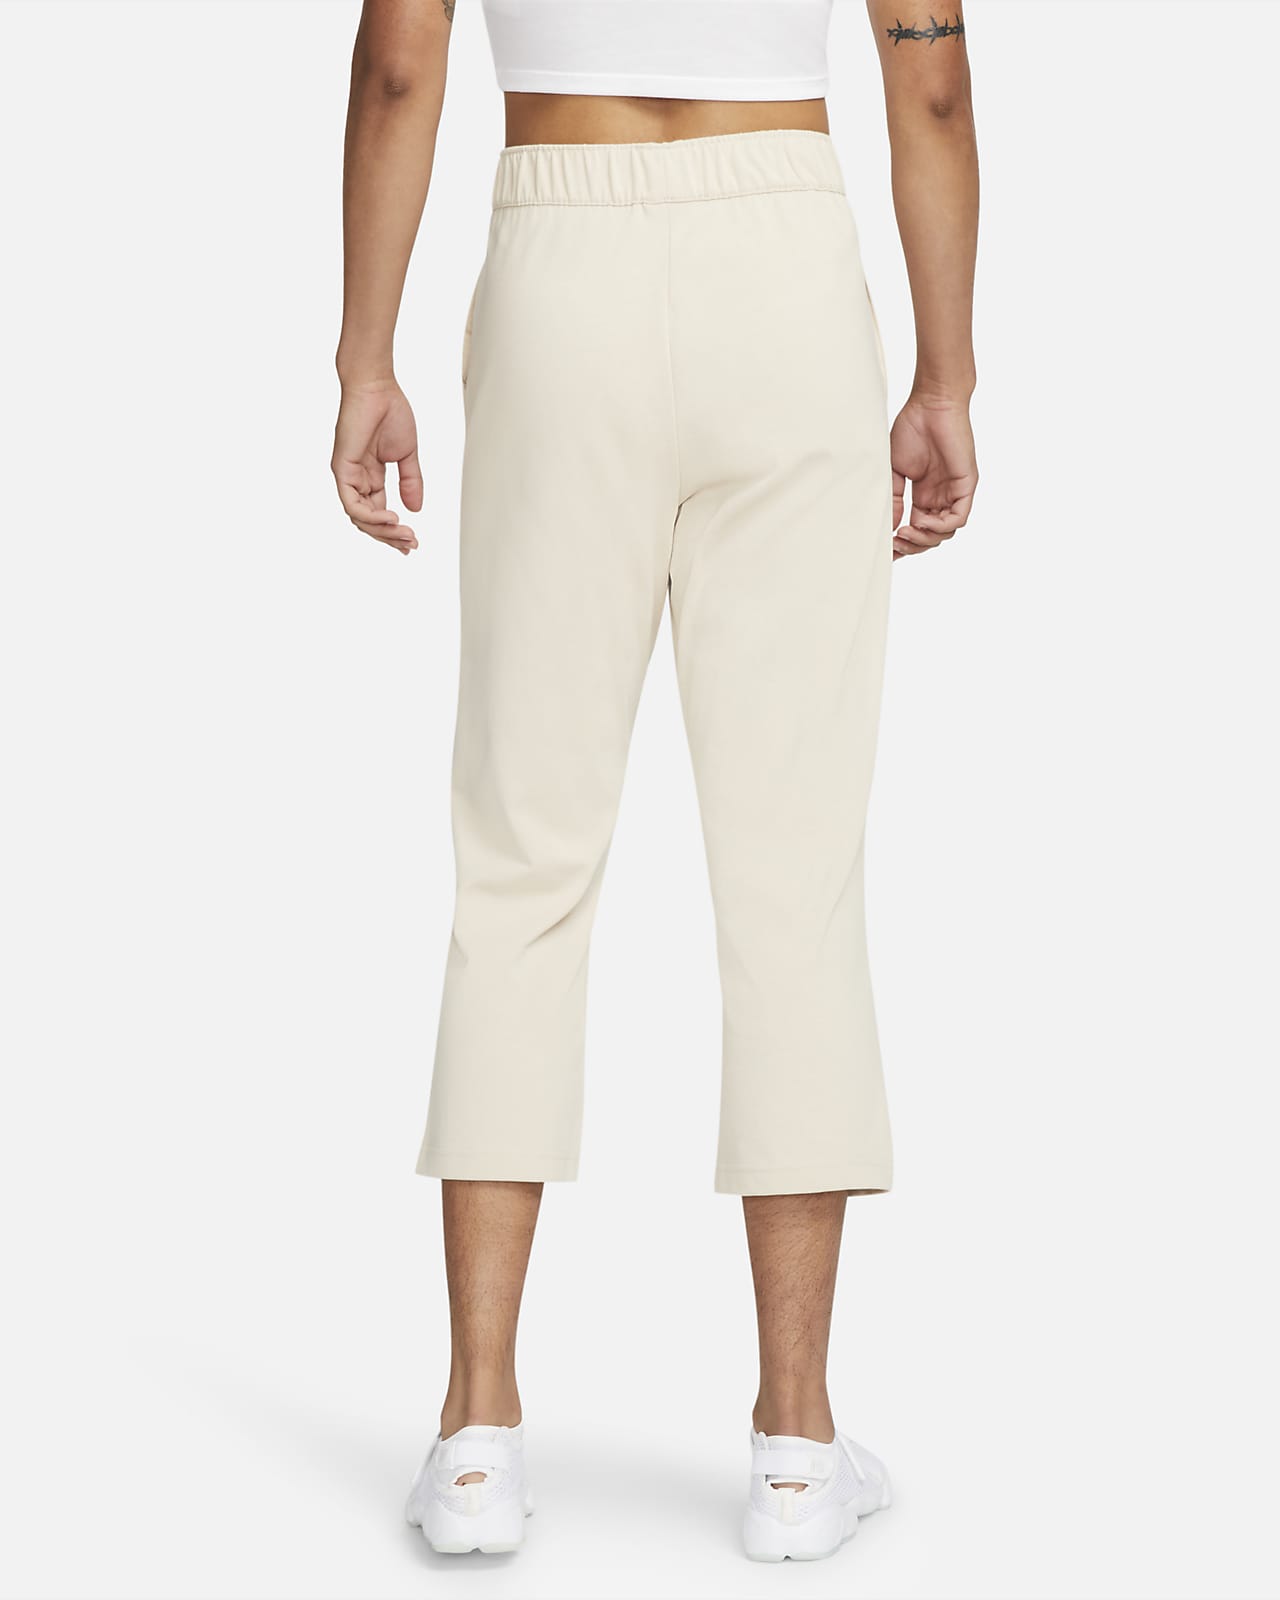 Pantalones capri de tejido de punto para mujer Sportswear. Nike.com